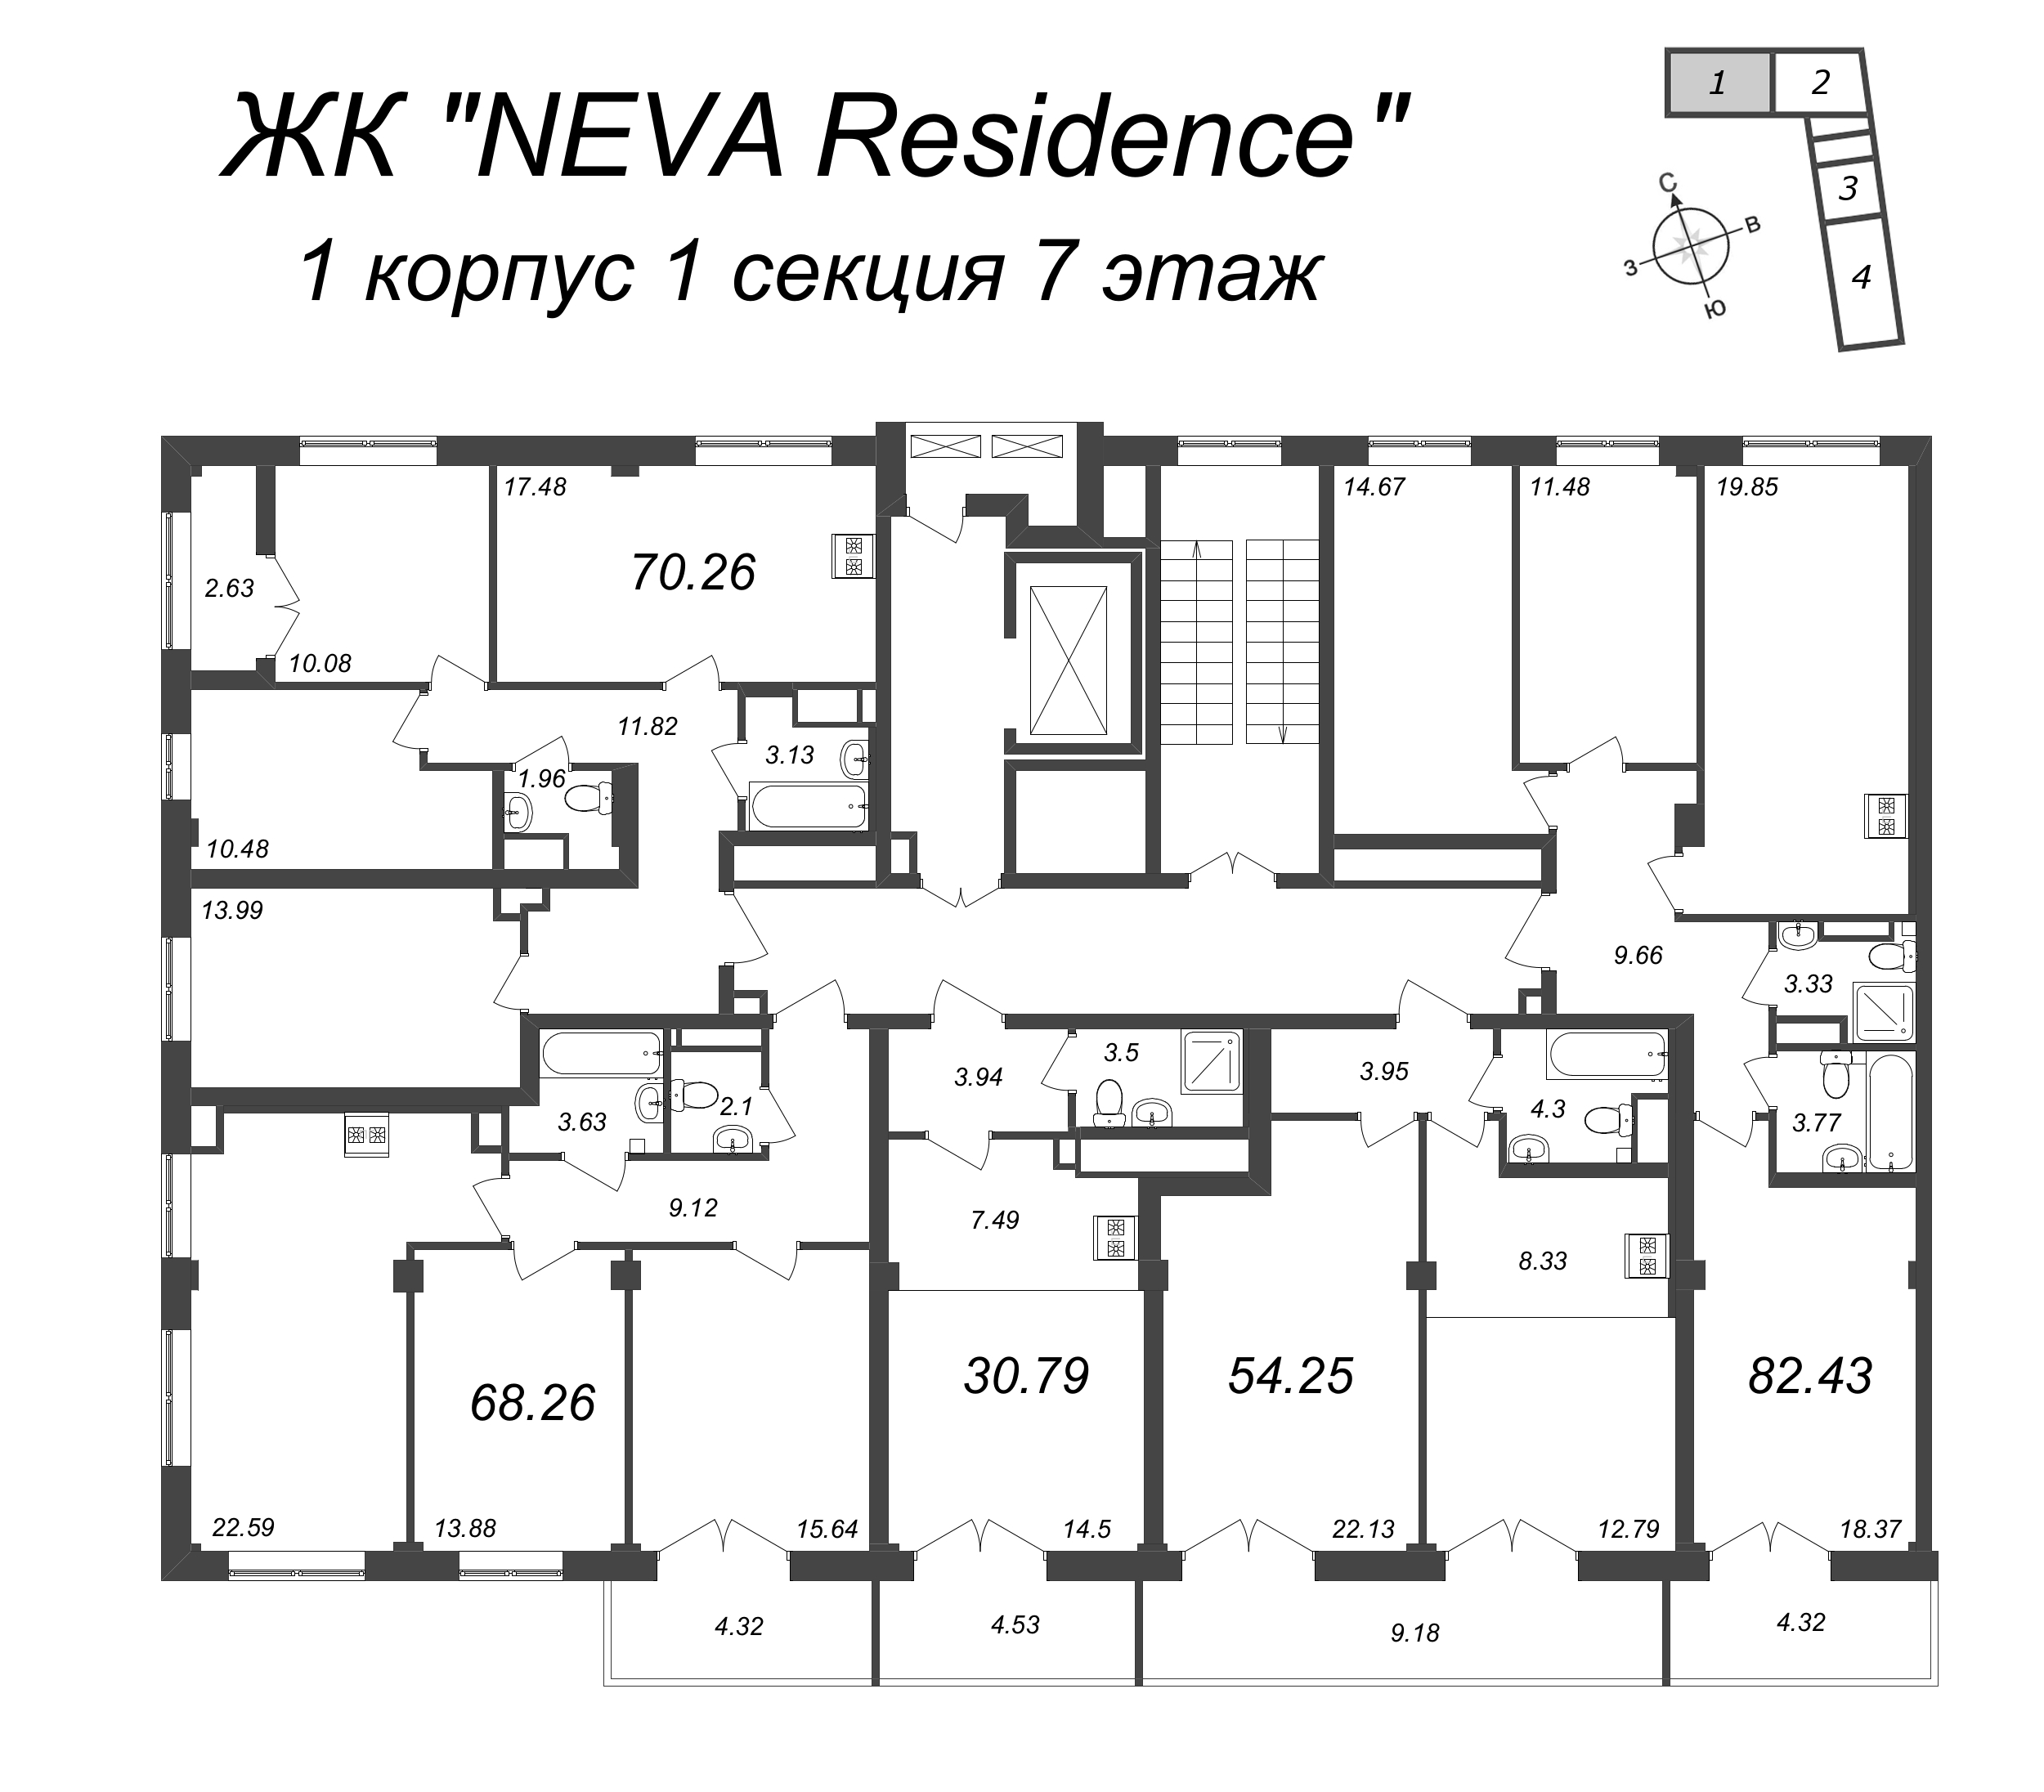 4-комнатная (Евро) квартира, 70.26 м² - планировка этажа